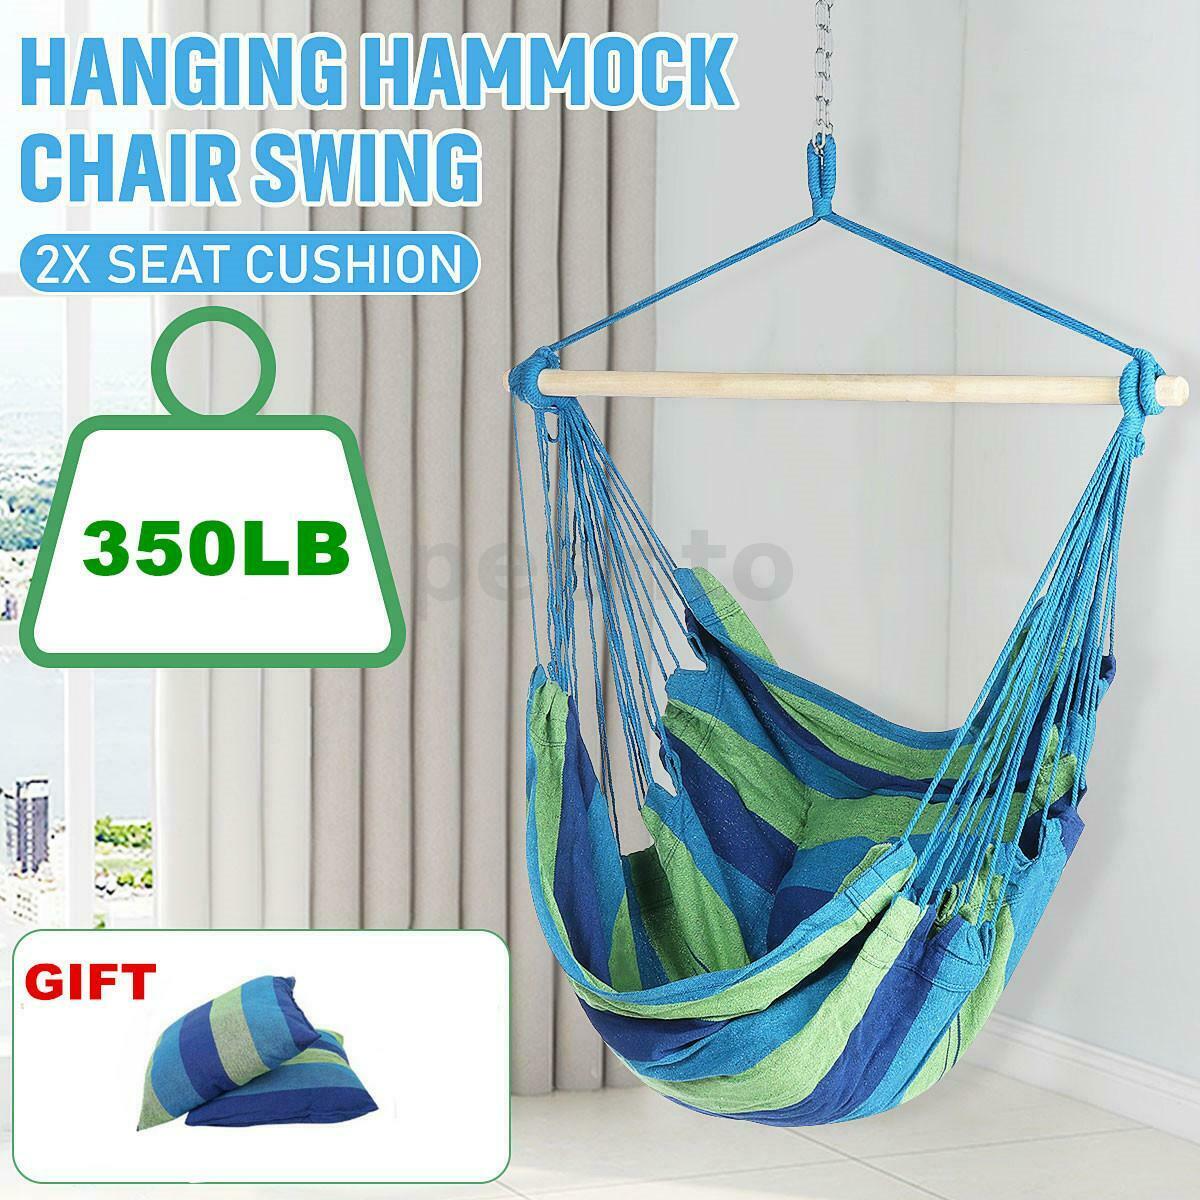 Hammock Chair Swing Camping Hanging Chair